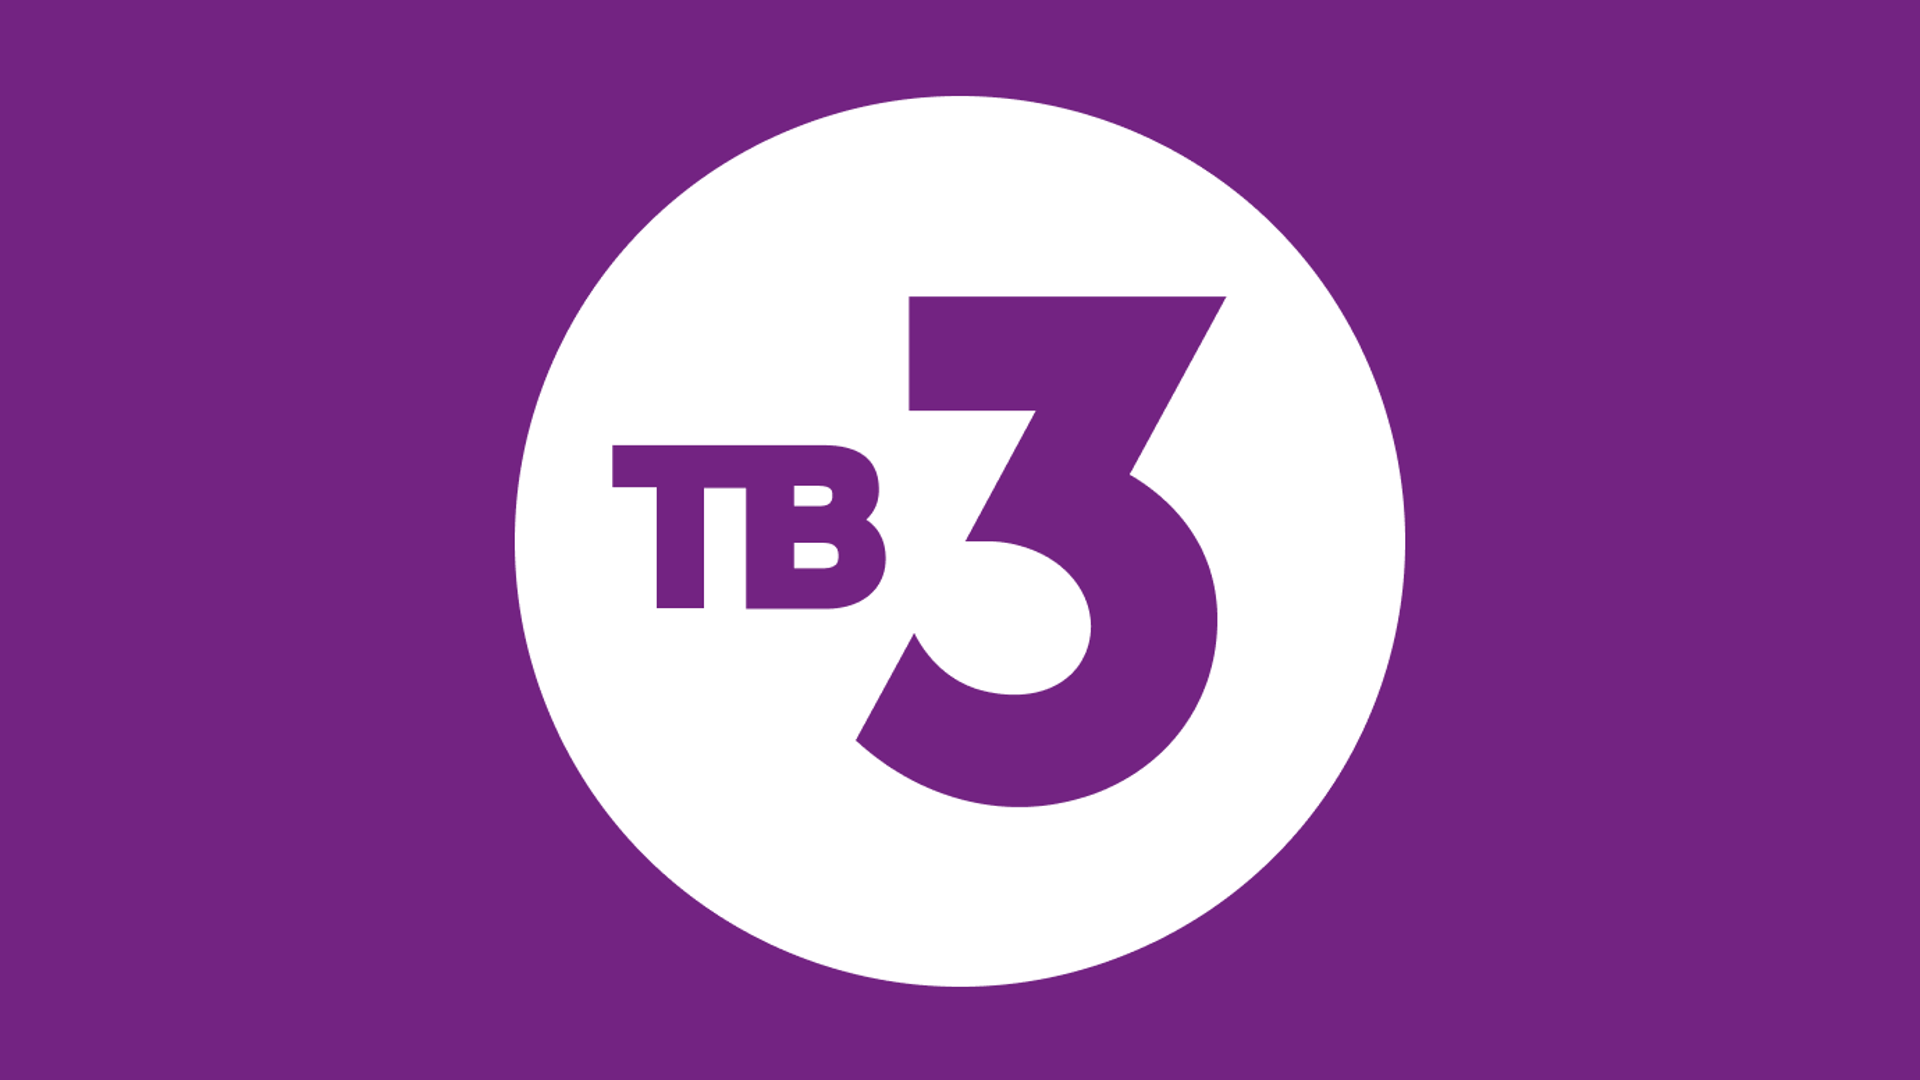 Тв3 Телеканал логотип. Канал тв3. ТВ 3 эмблема. Эмблема канала тв3. Эфир тв mail